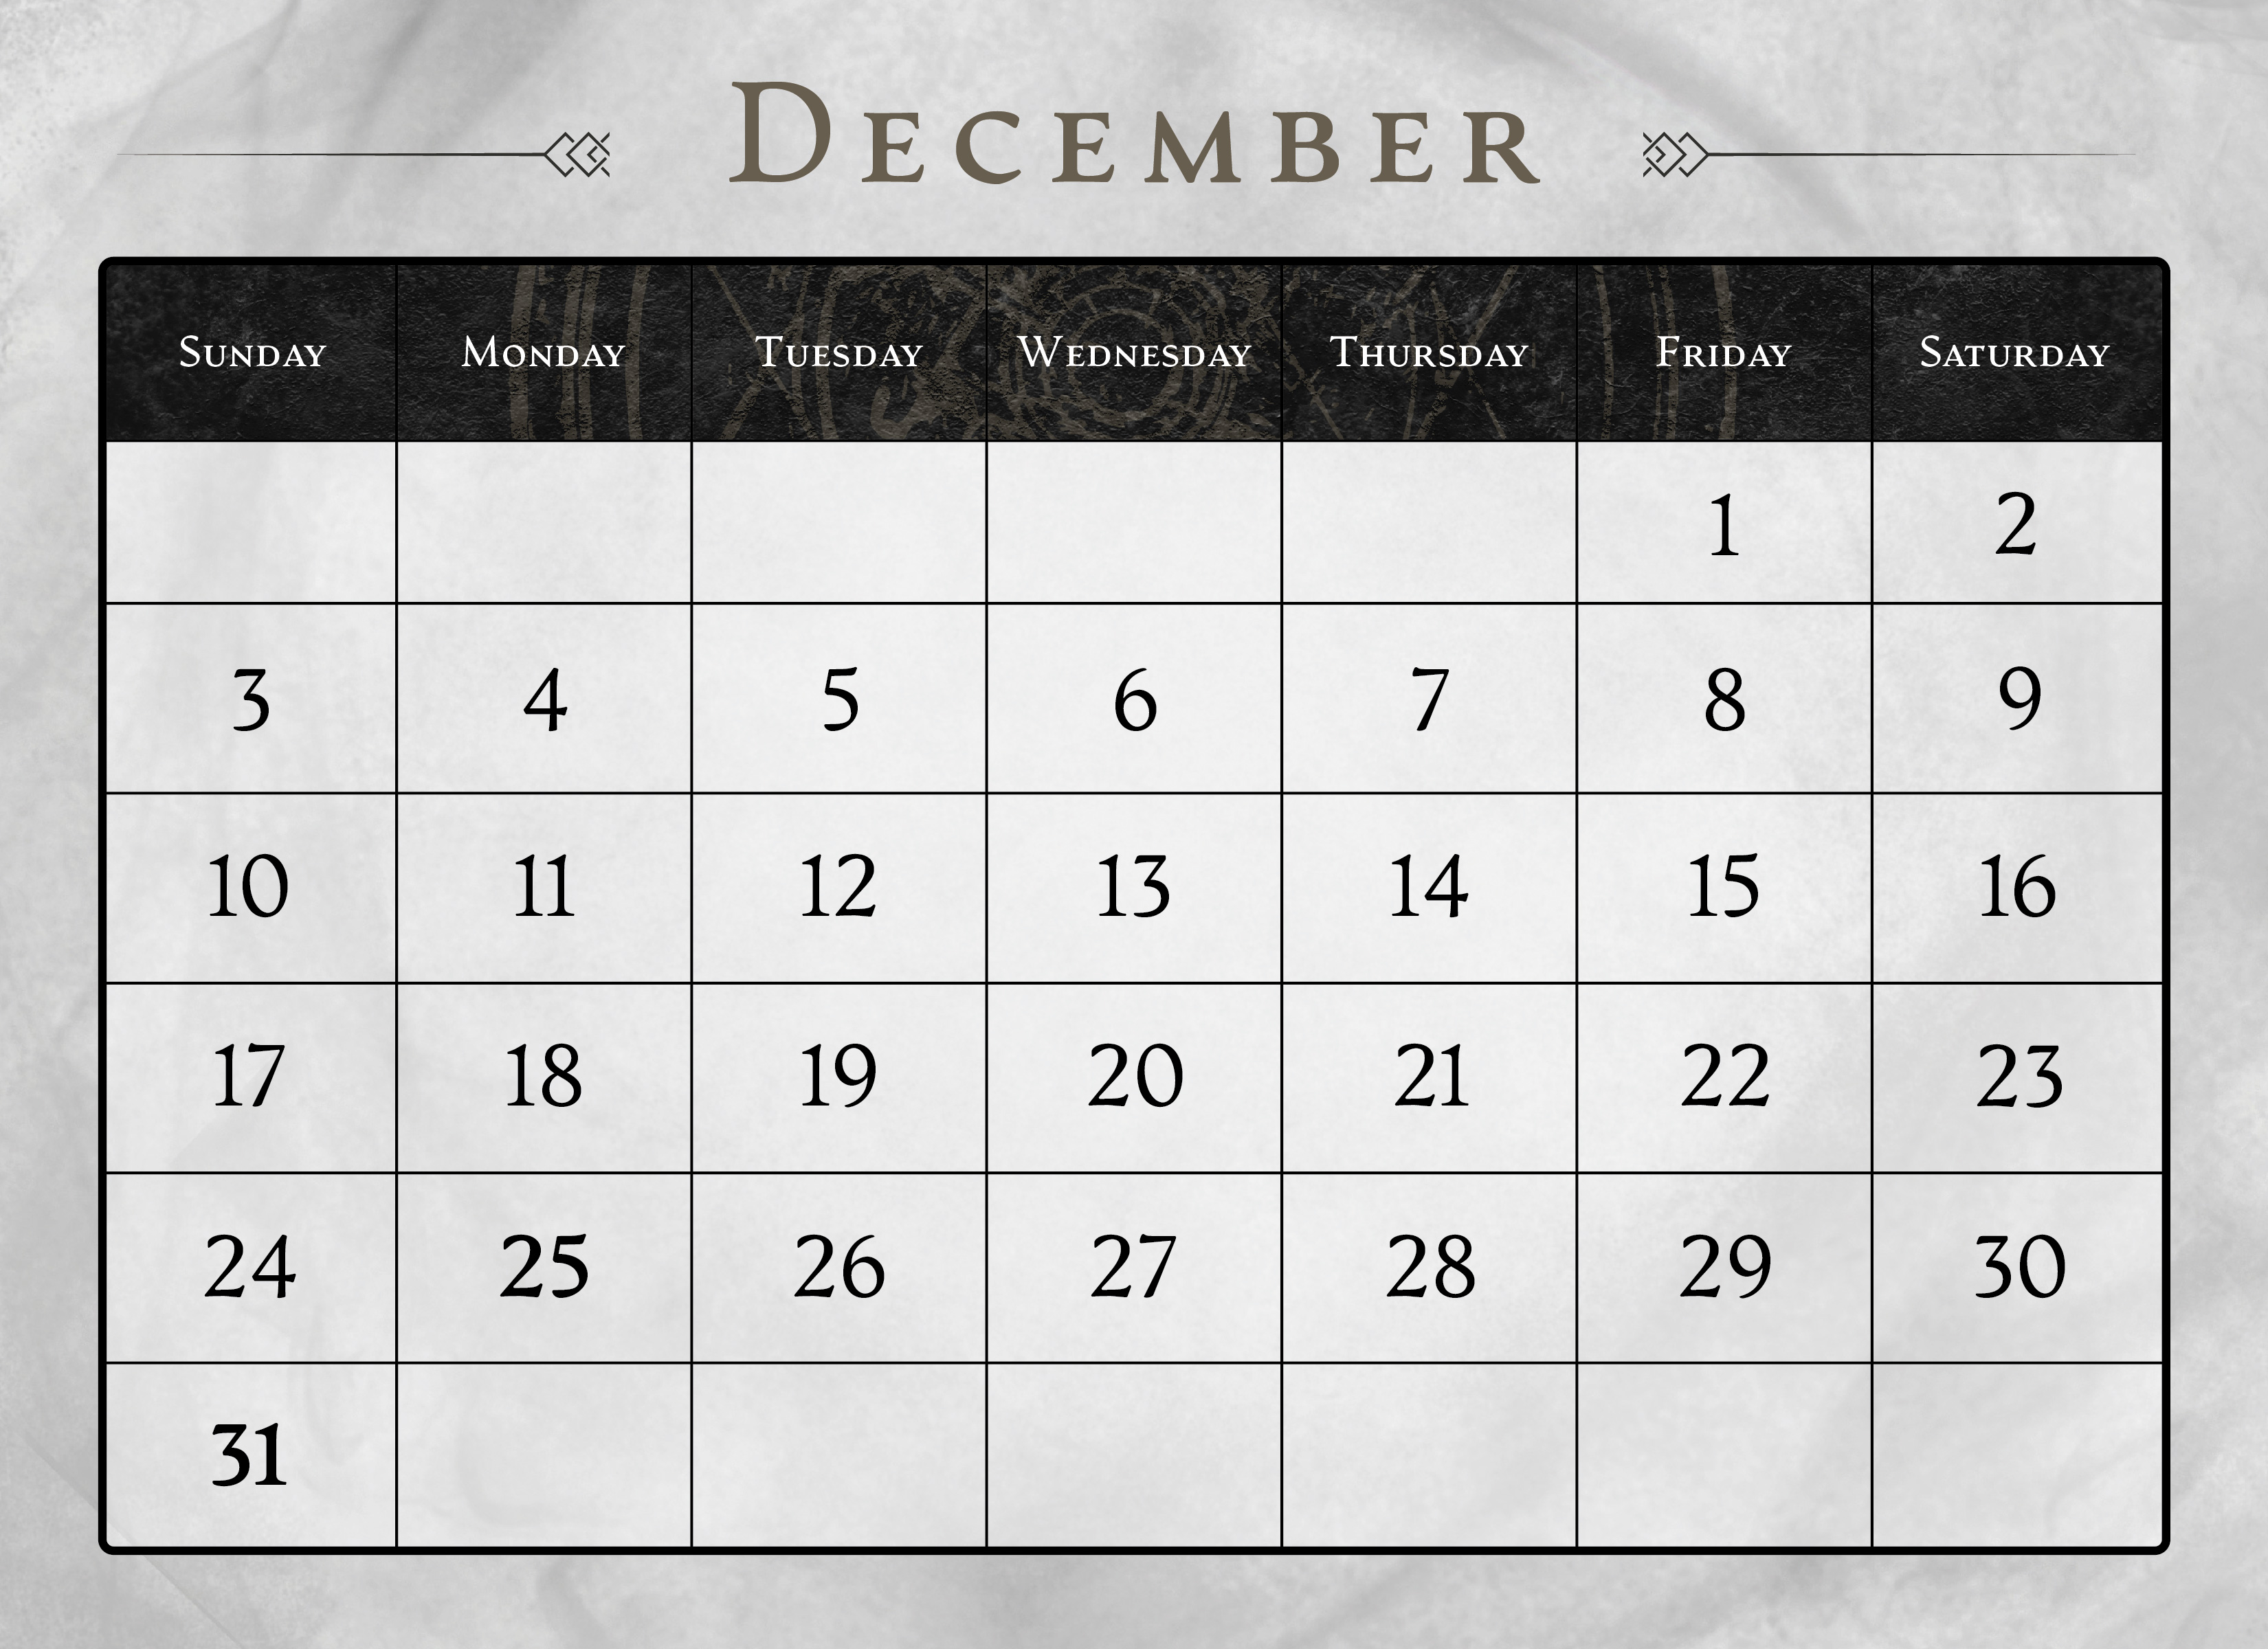 12 dates December